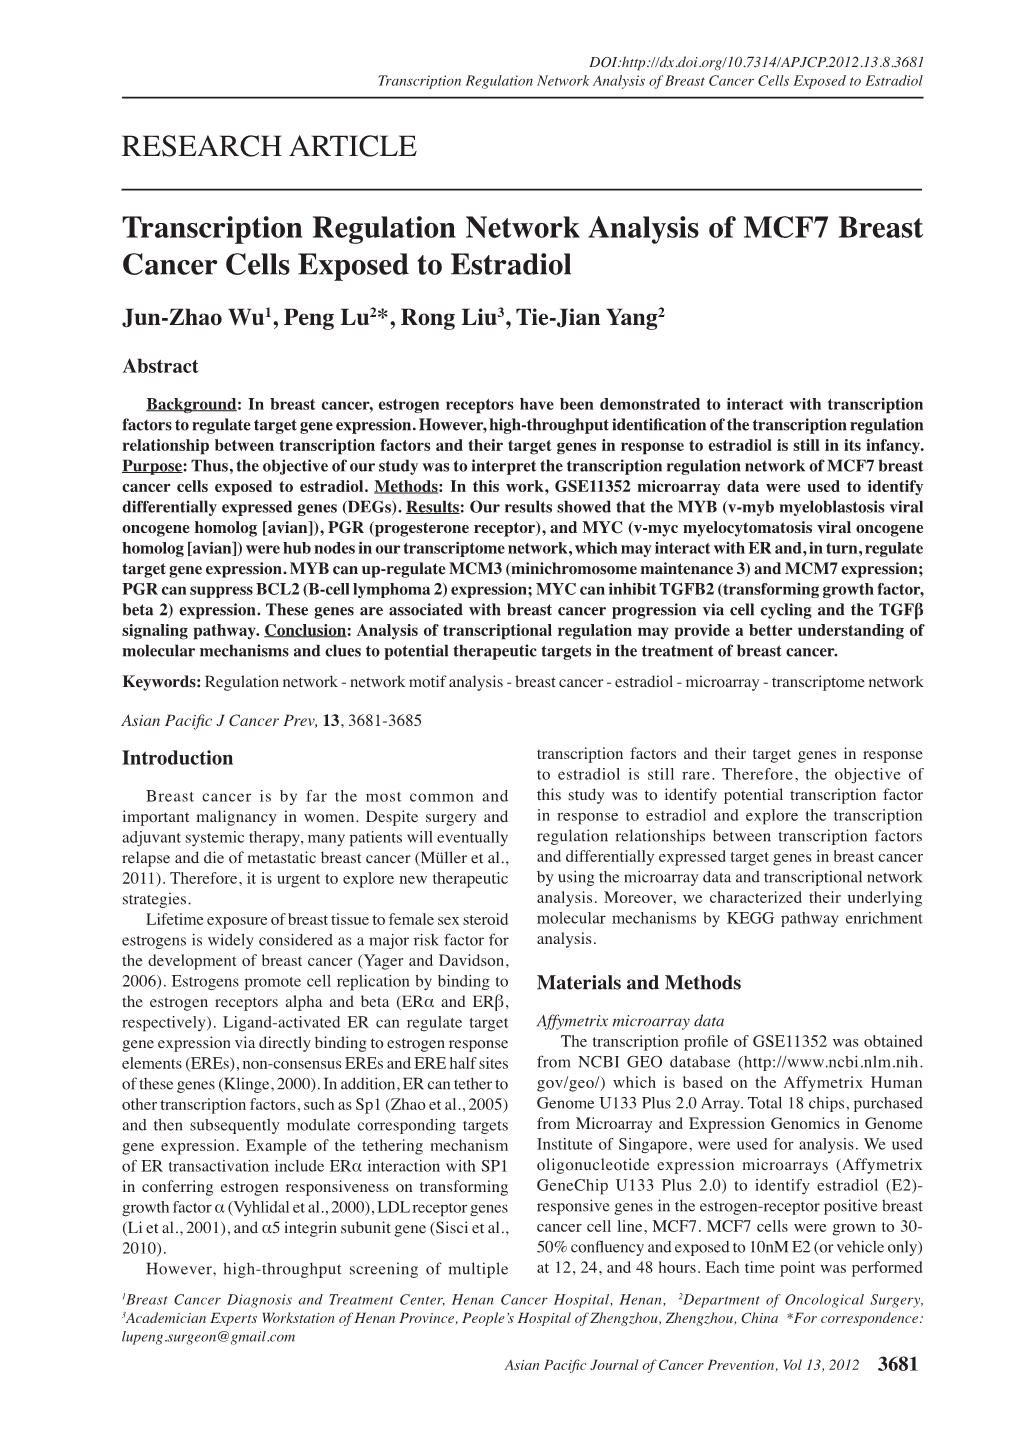 Transcription Regulation Network Analysis of MCF7 Breast Cancer Cells Exposed to Estradiol Jun-Zhao Wu1, Peng Lu2*, Rong Liu3, Tie-Jian Yang2